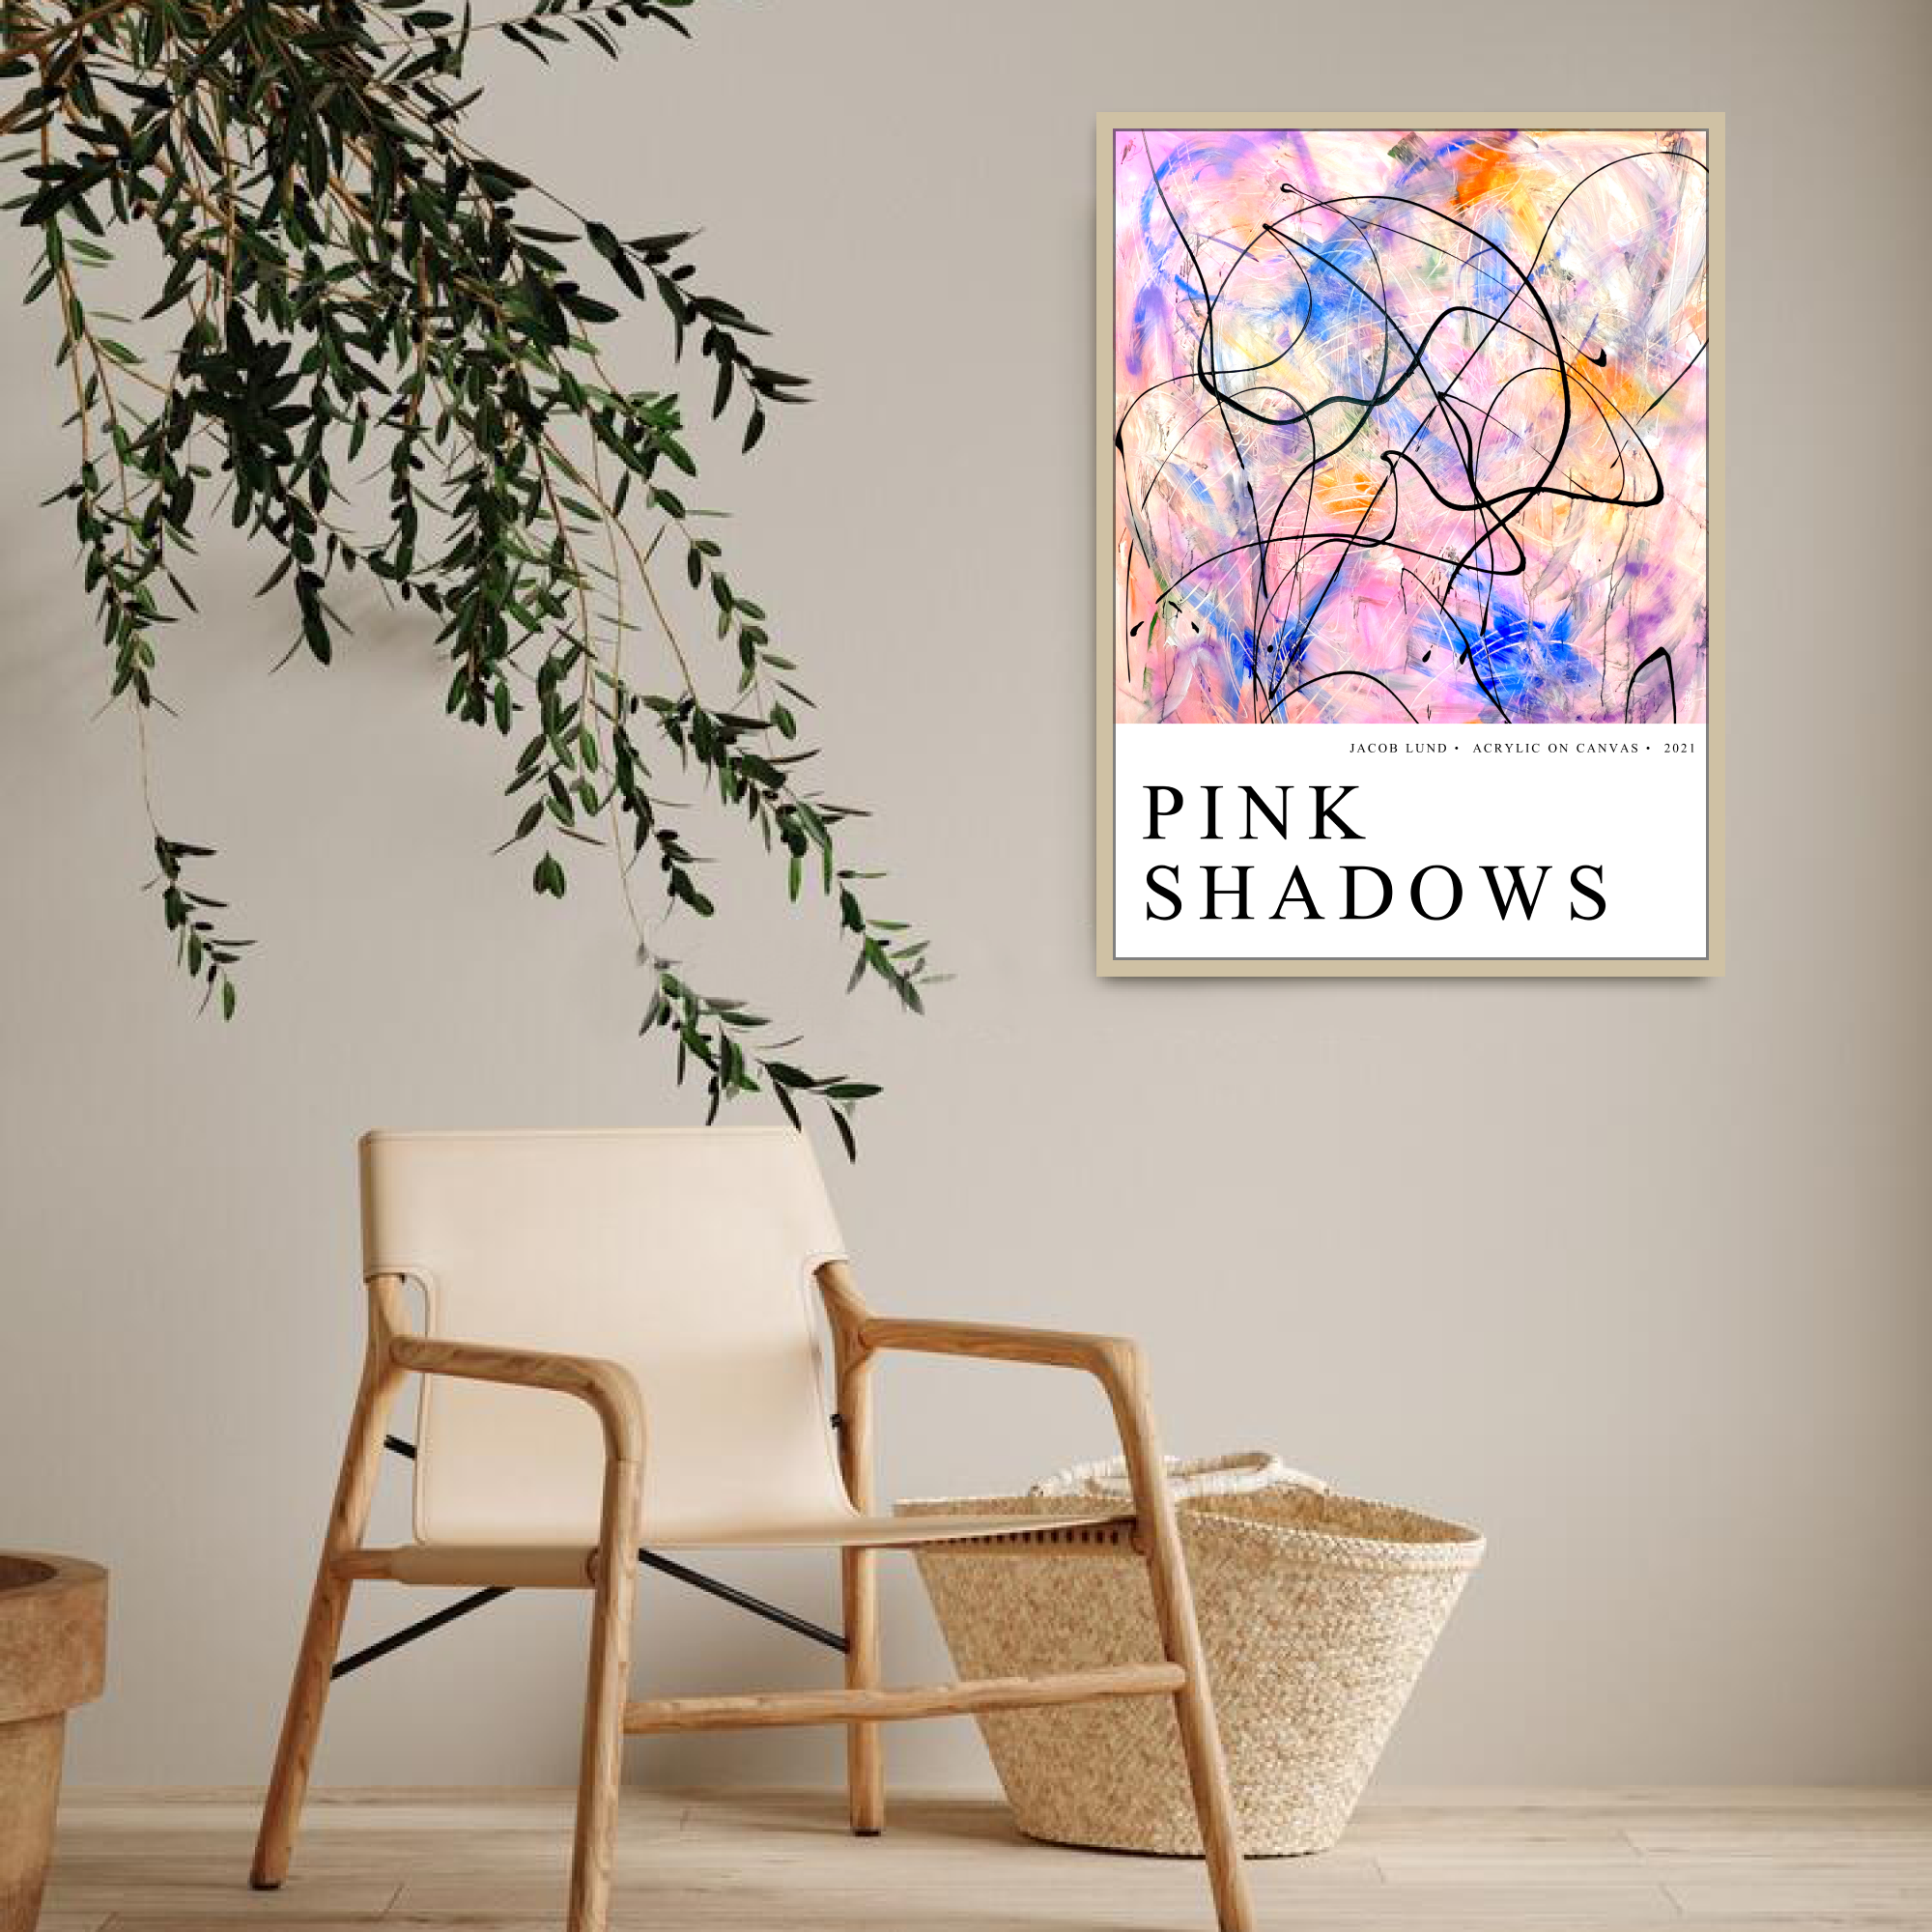 Plakat: "Pink Shadows" (hvid baggrund)